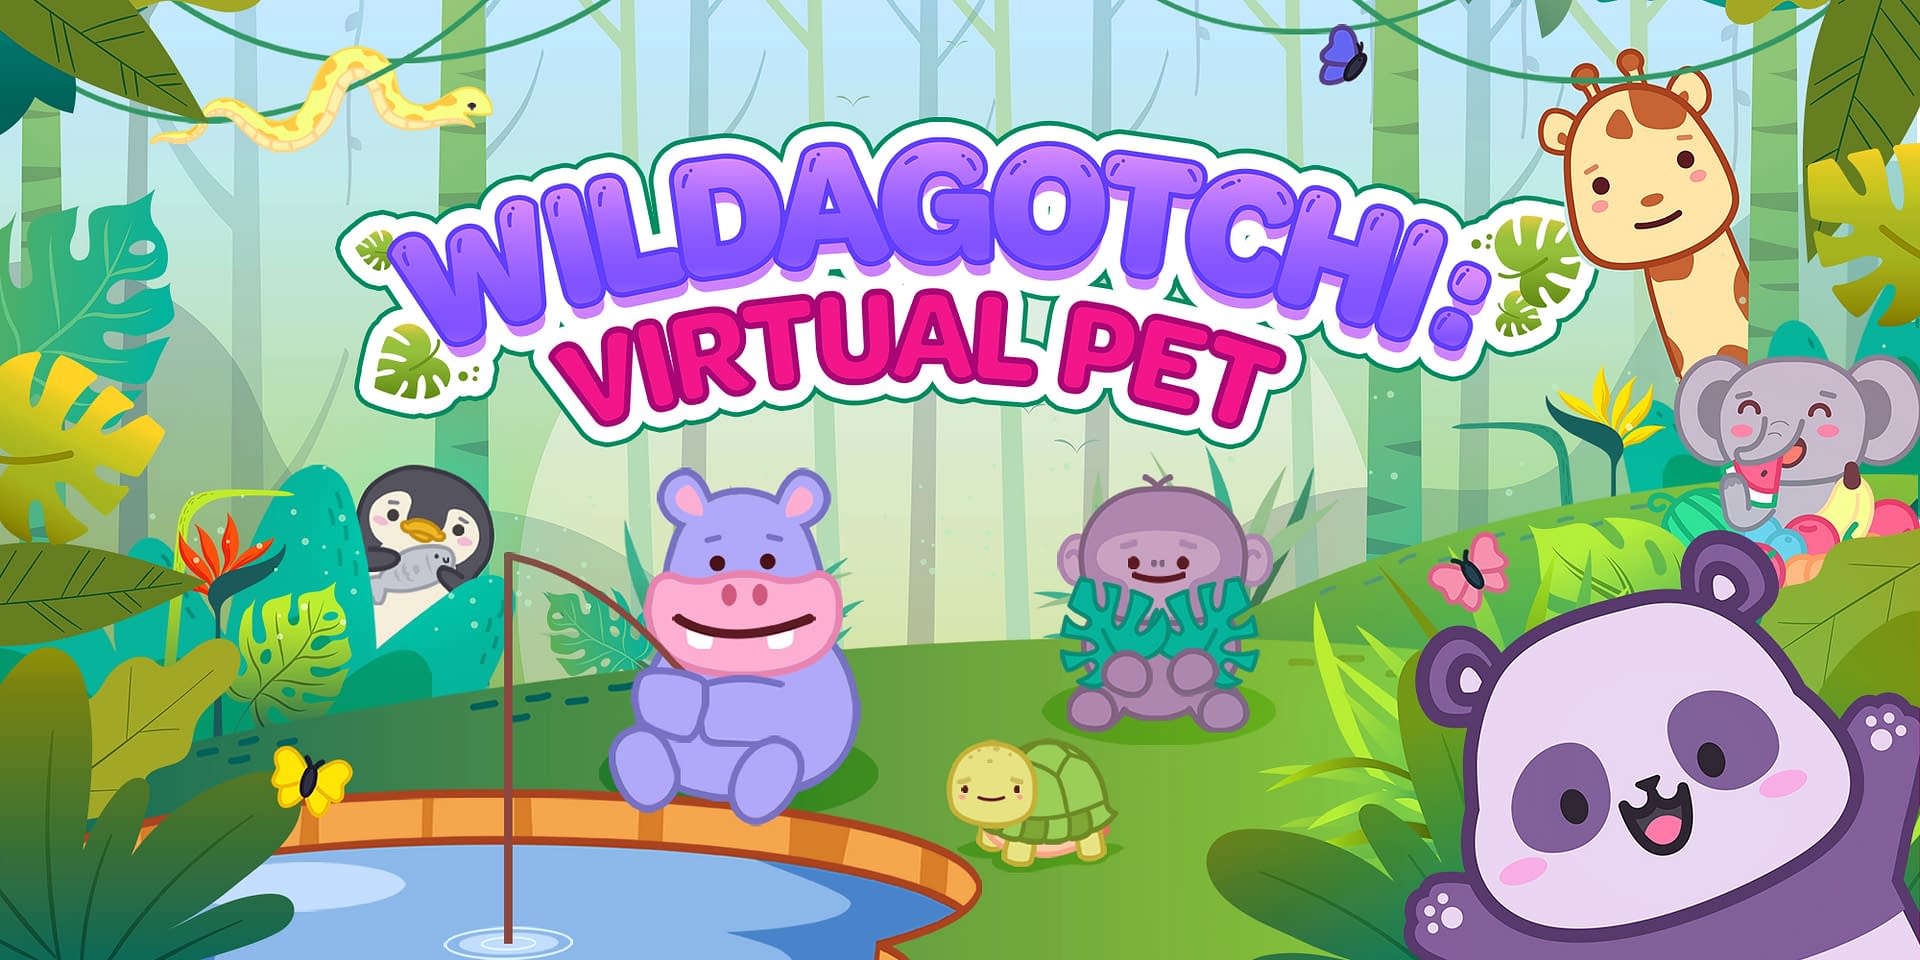 Wildagotchi: Virtual Pet Releases For Nintendo Switch